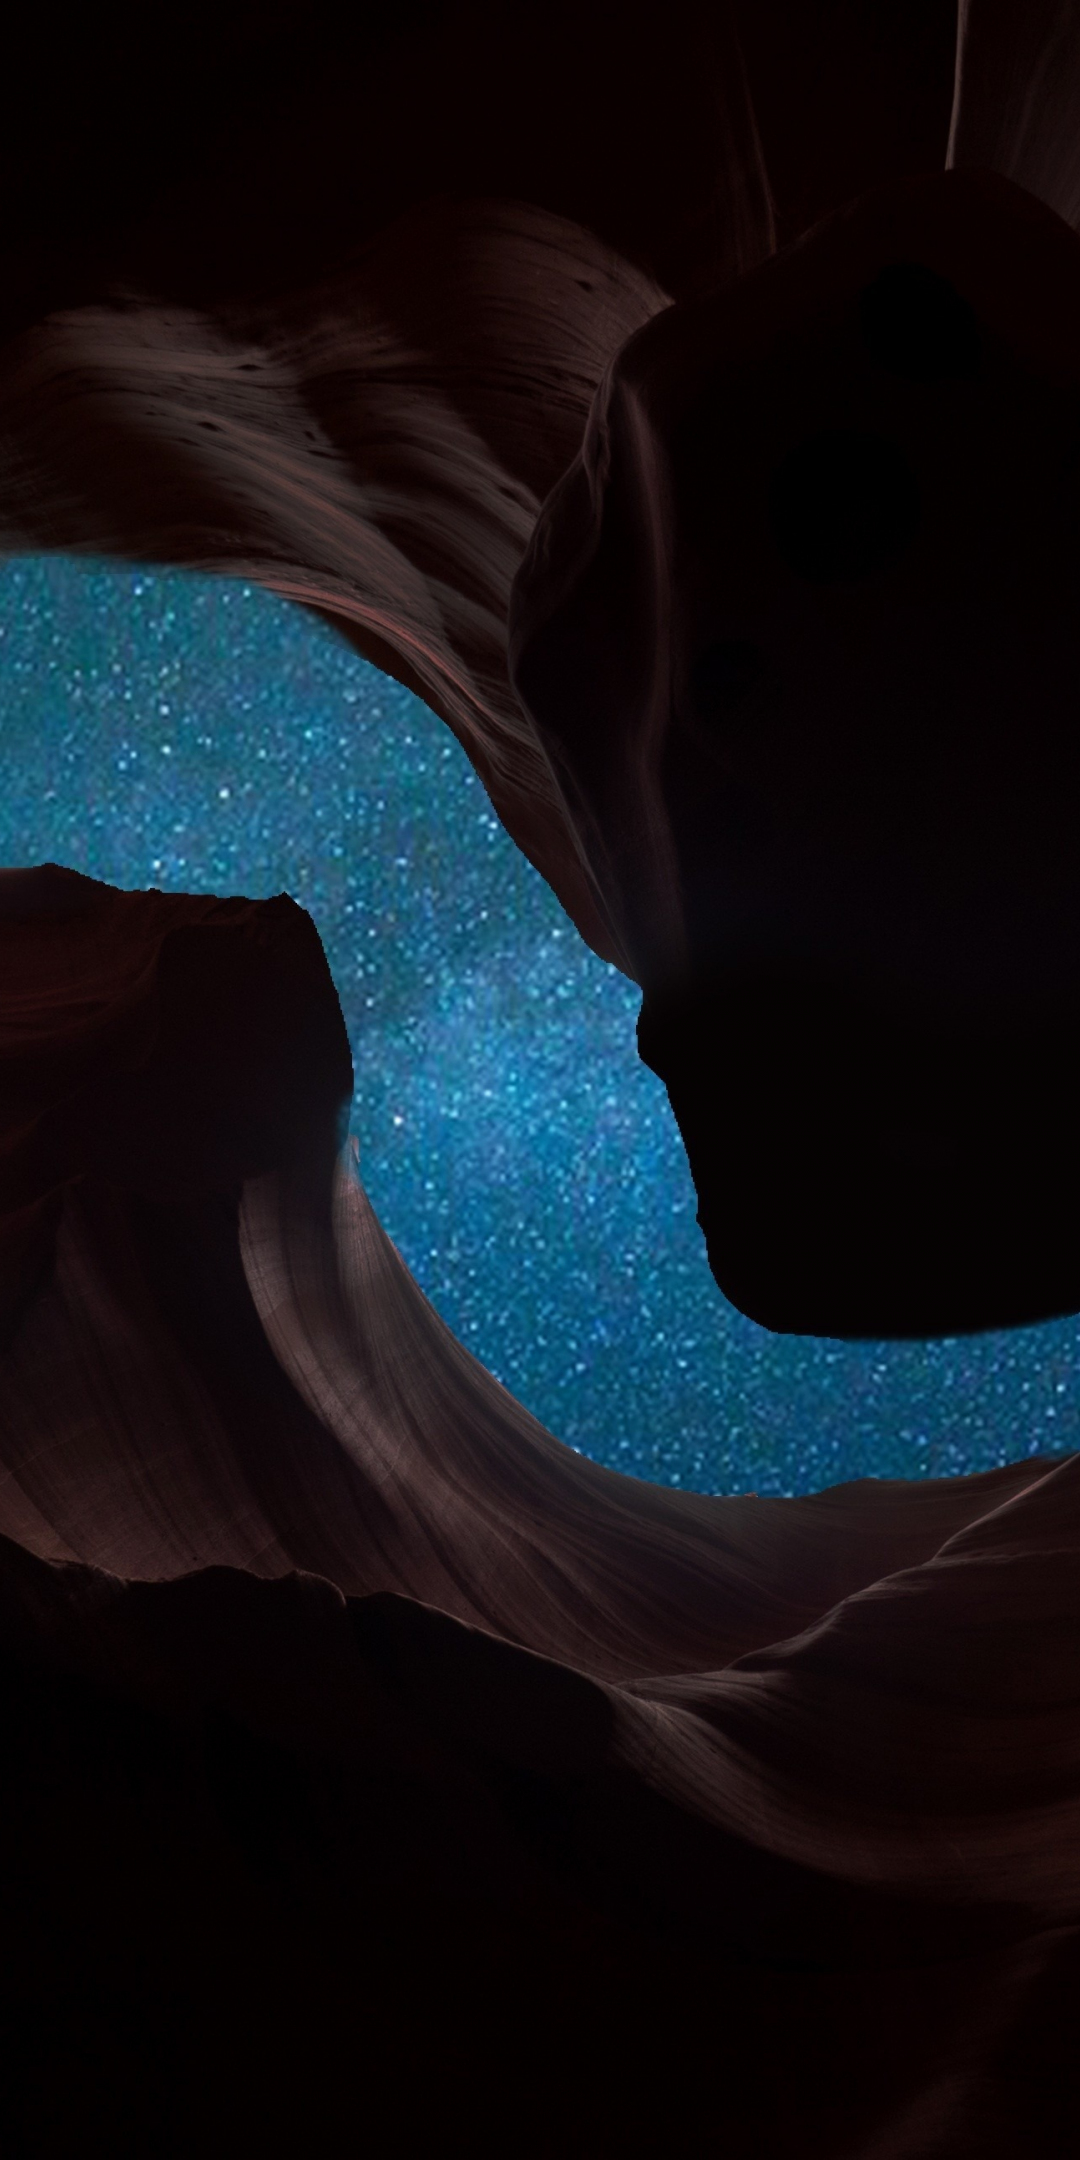 Cave, nature, night, 1080x2160 wallpaper